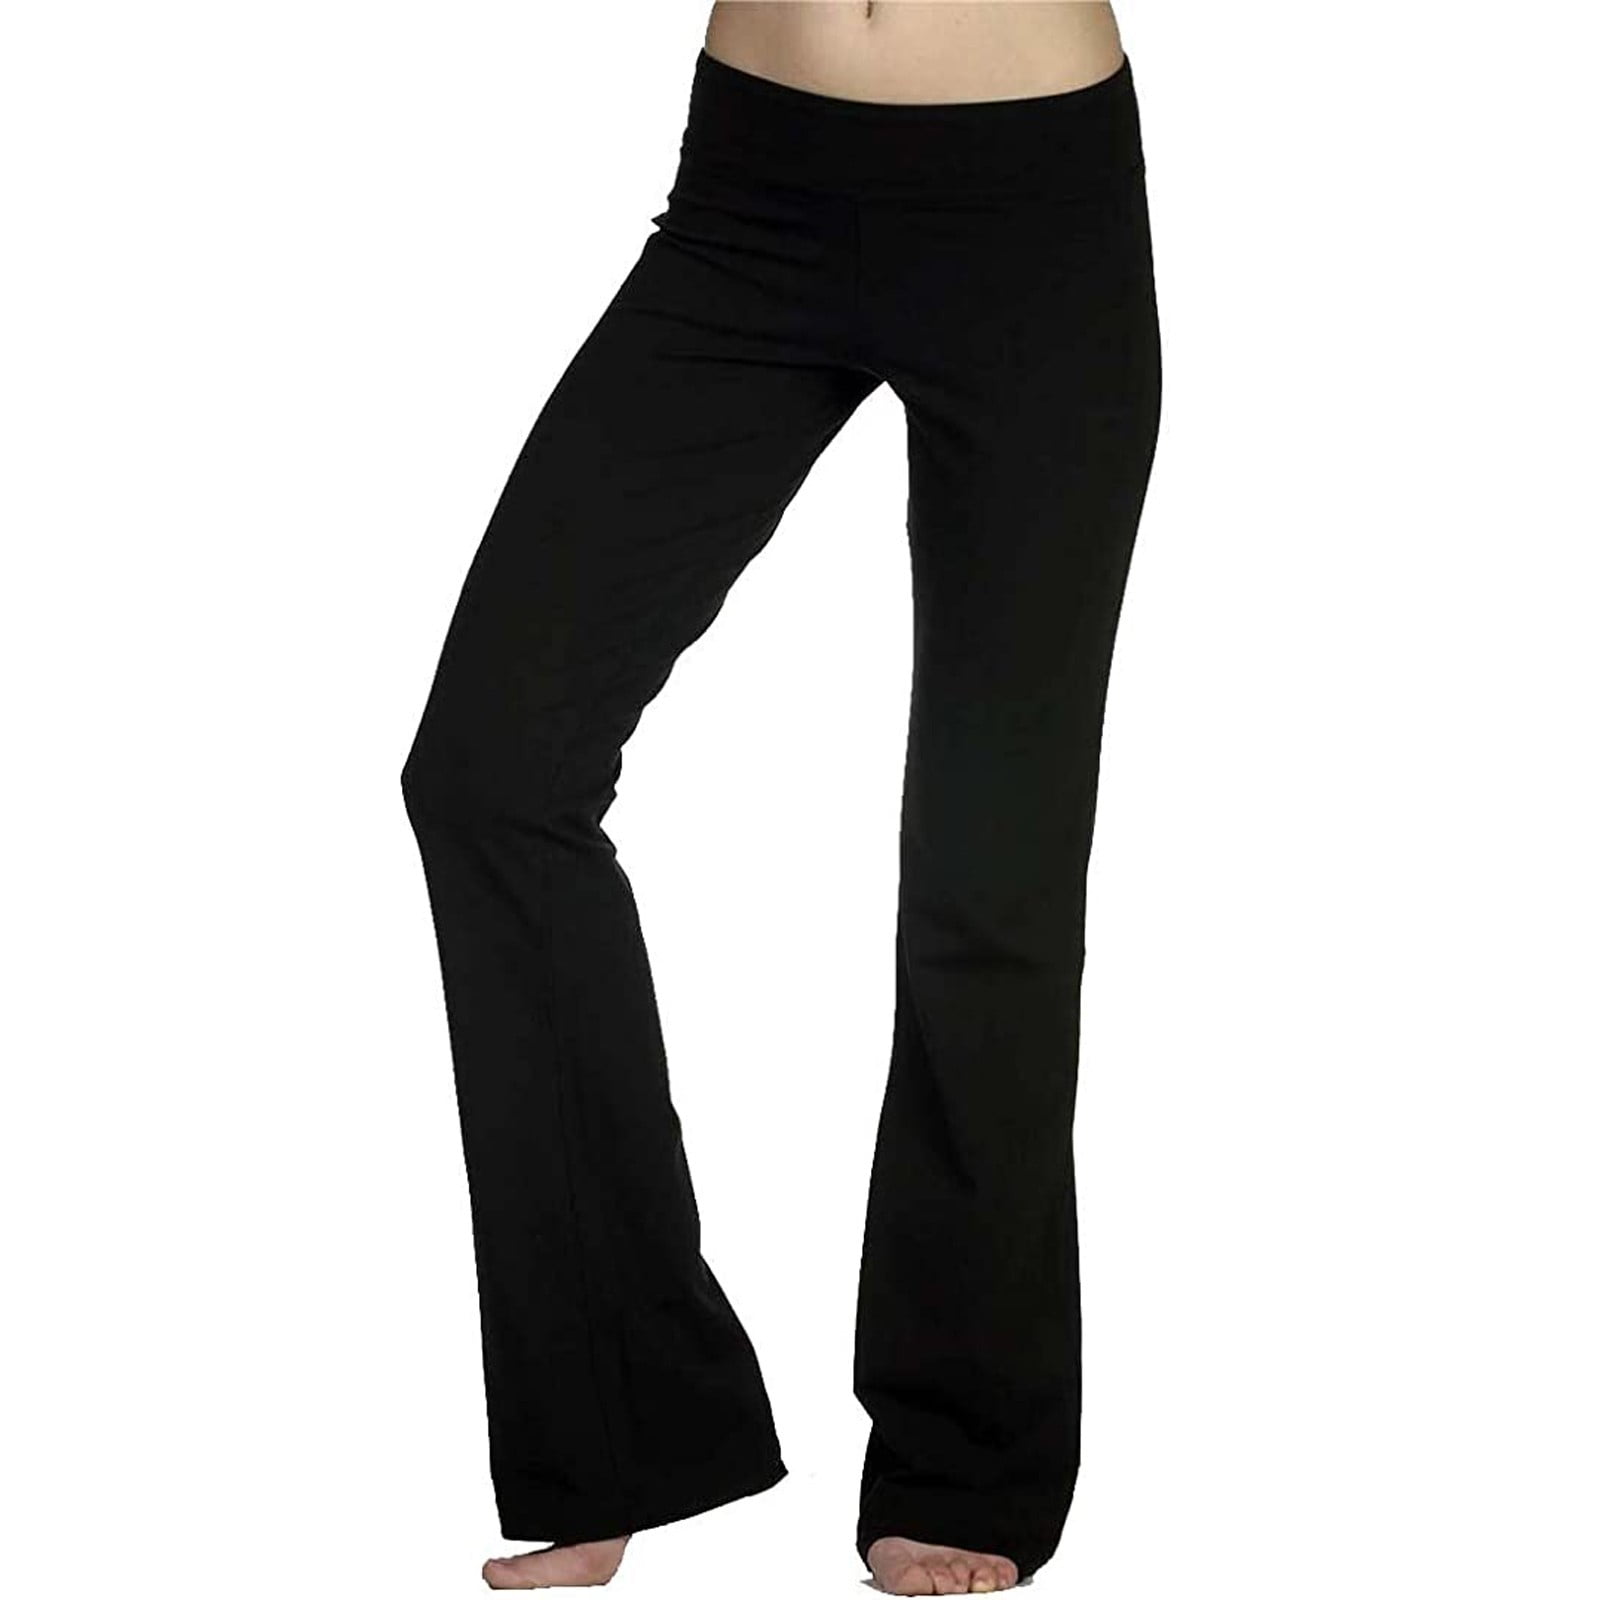 JGTDBPO Flare Leggings For Women Bootcut Bell Bottom Jeans High Waisted  Stretch Slimming Bell Bottoms Jeans Thin Yoga Pants Fitness Pants 